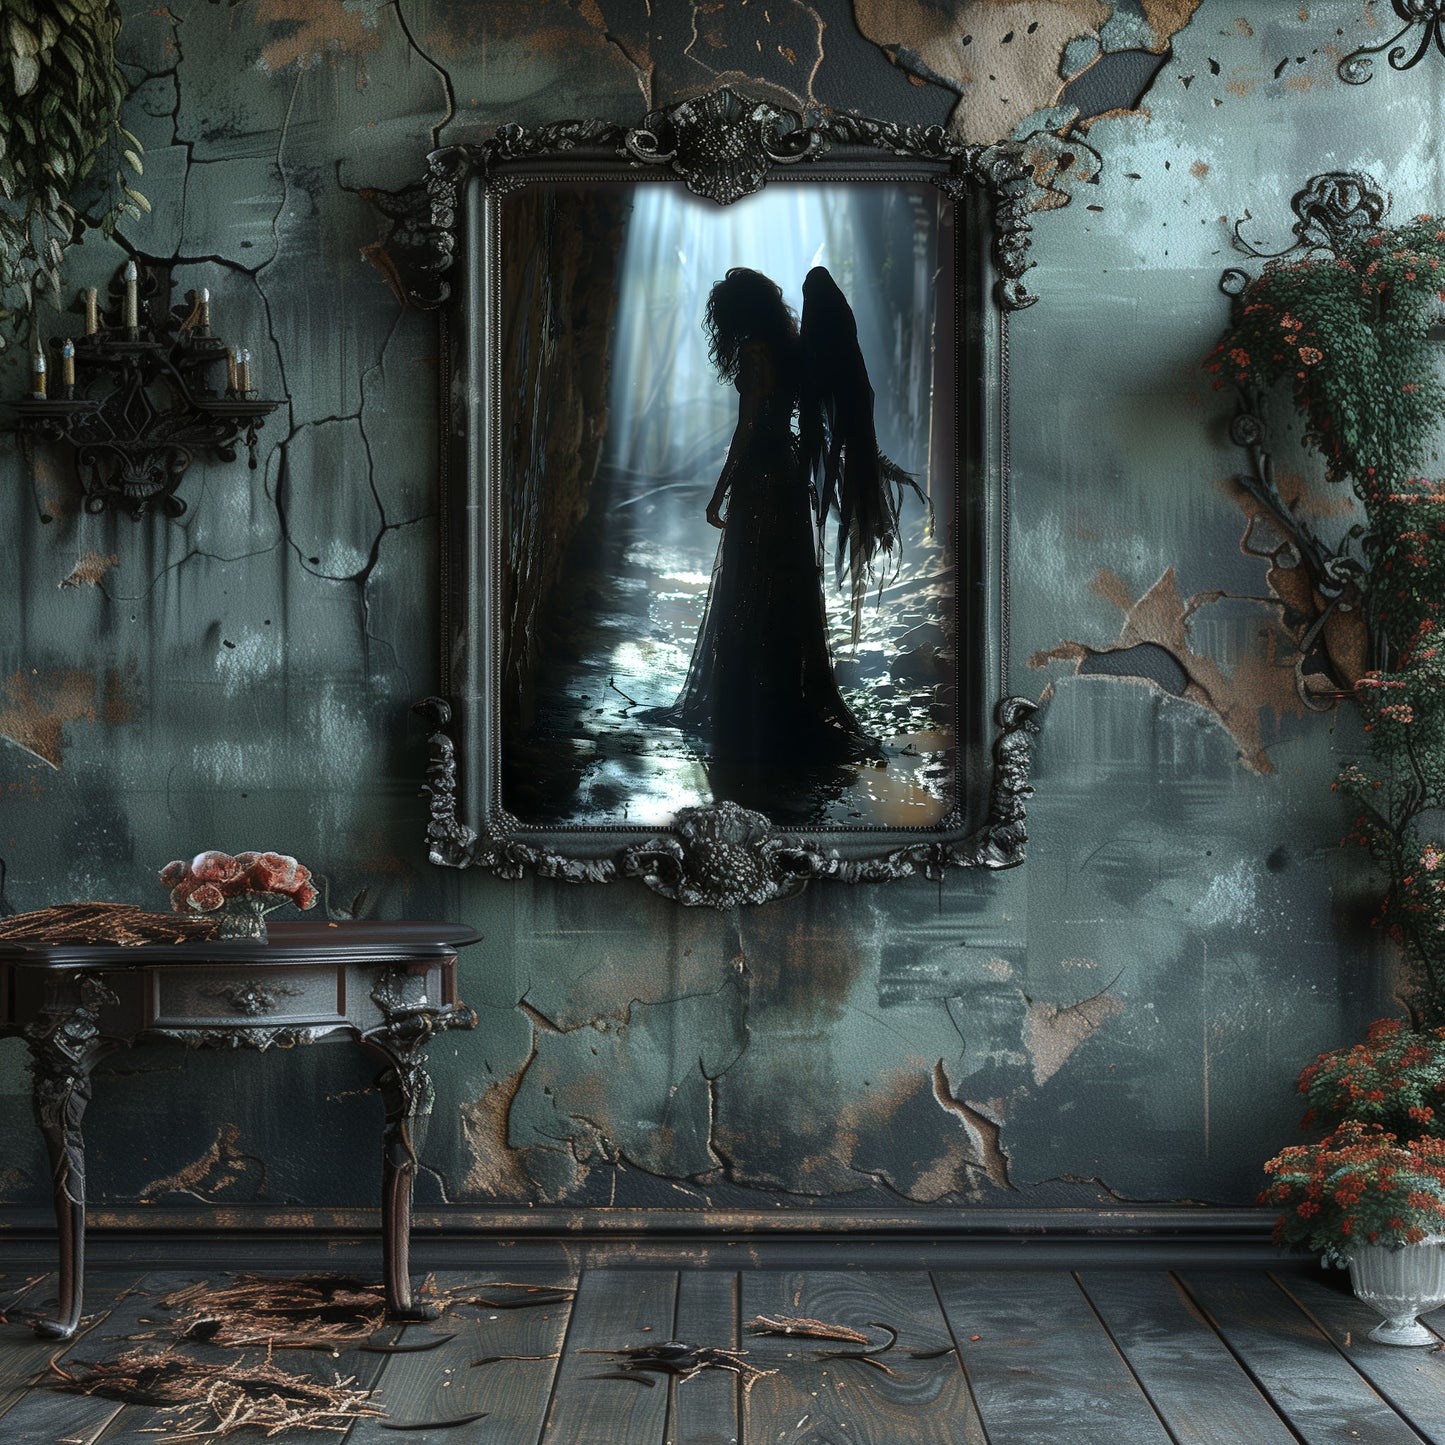 Dark Gothic Angel Poster: Stranded in Muddy Forest